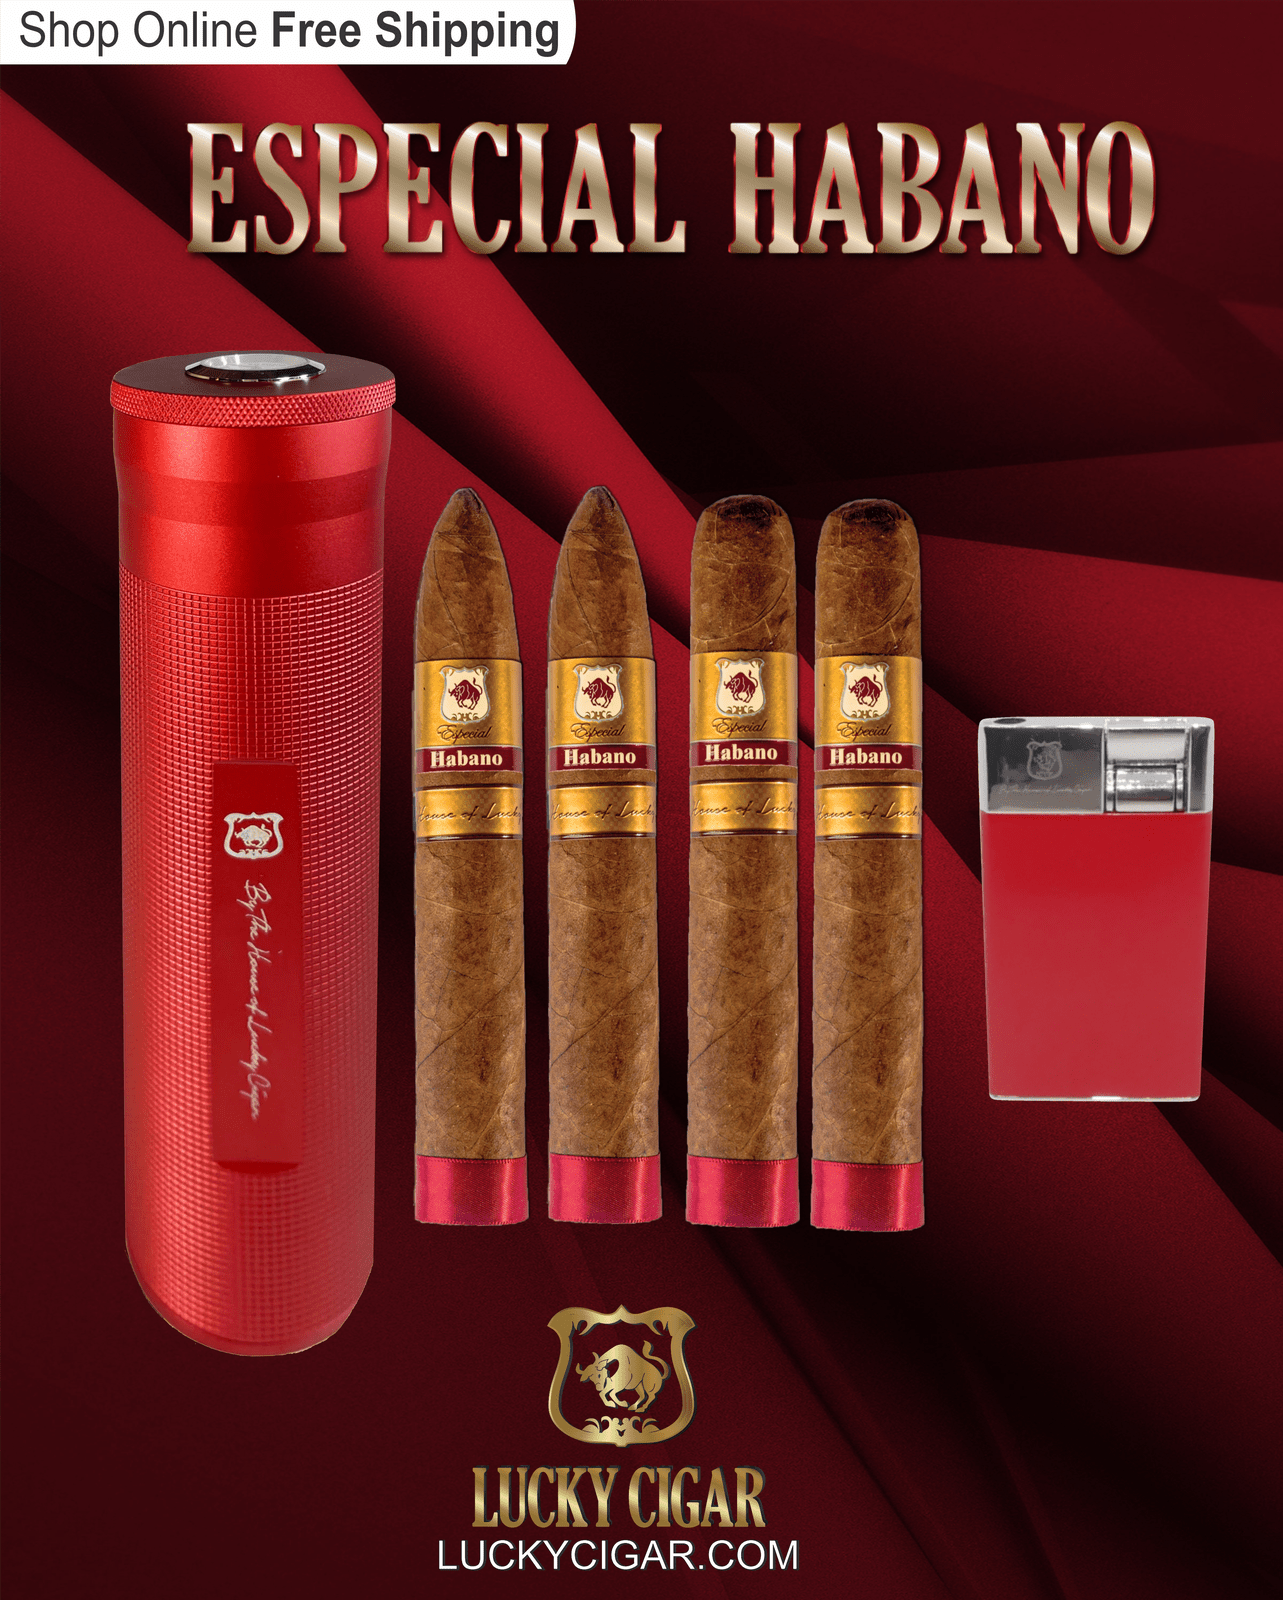 Habano Cigars: Especial Habano by Lucky Cigar: Set of 4 Cigars 2 Toro, 2 Torpedo with Torch, Humidor